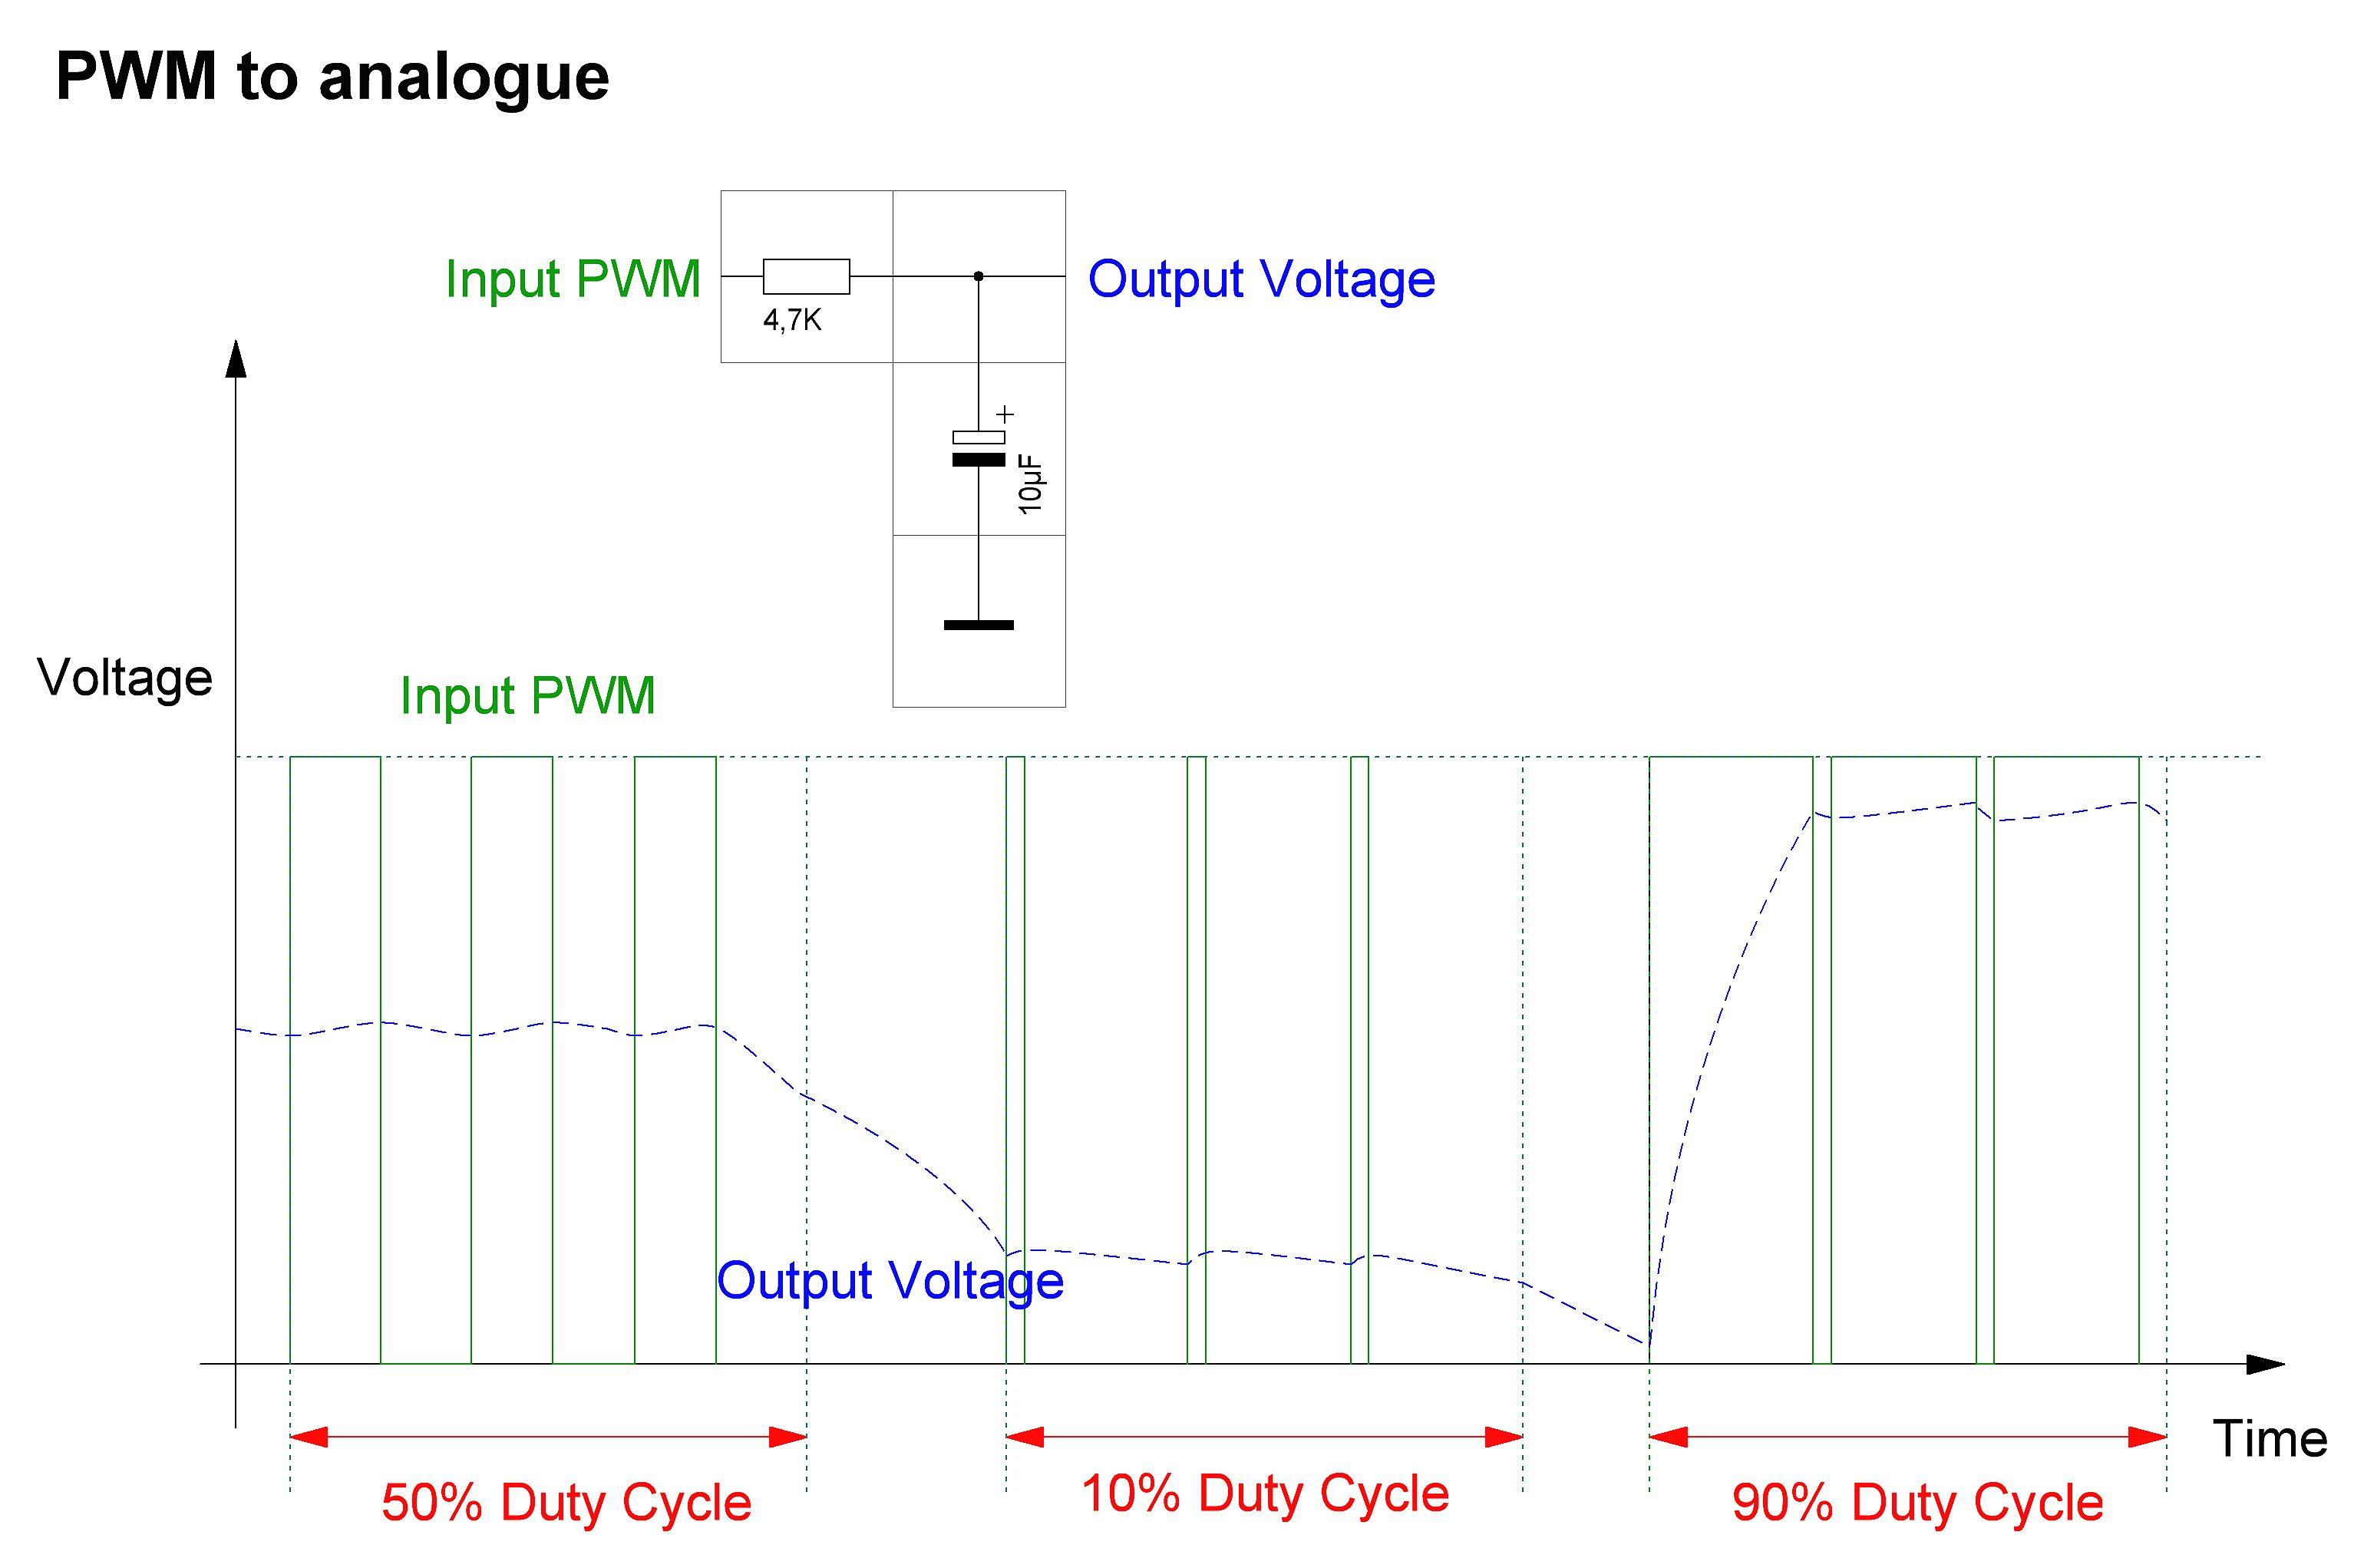 PWM analogue graph